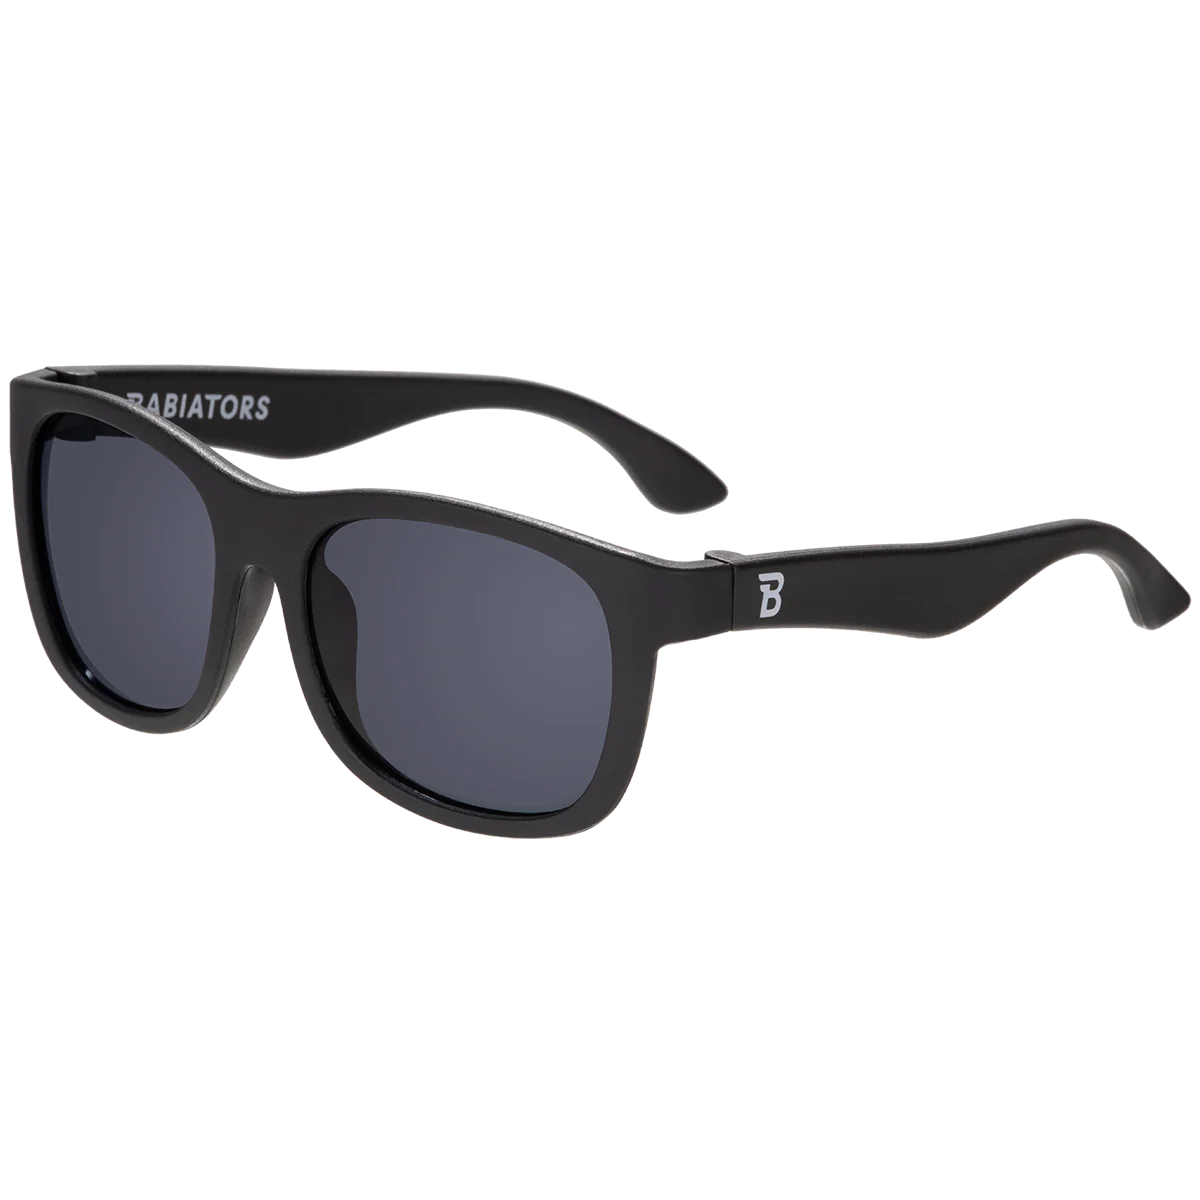 Babiators Original Navigators - Jet Black Sunglasses Babiators 